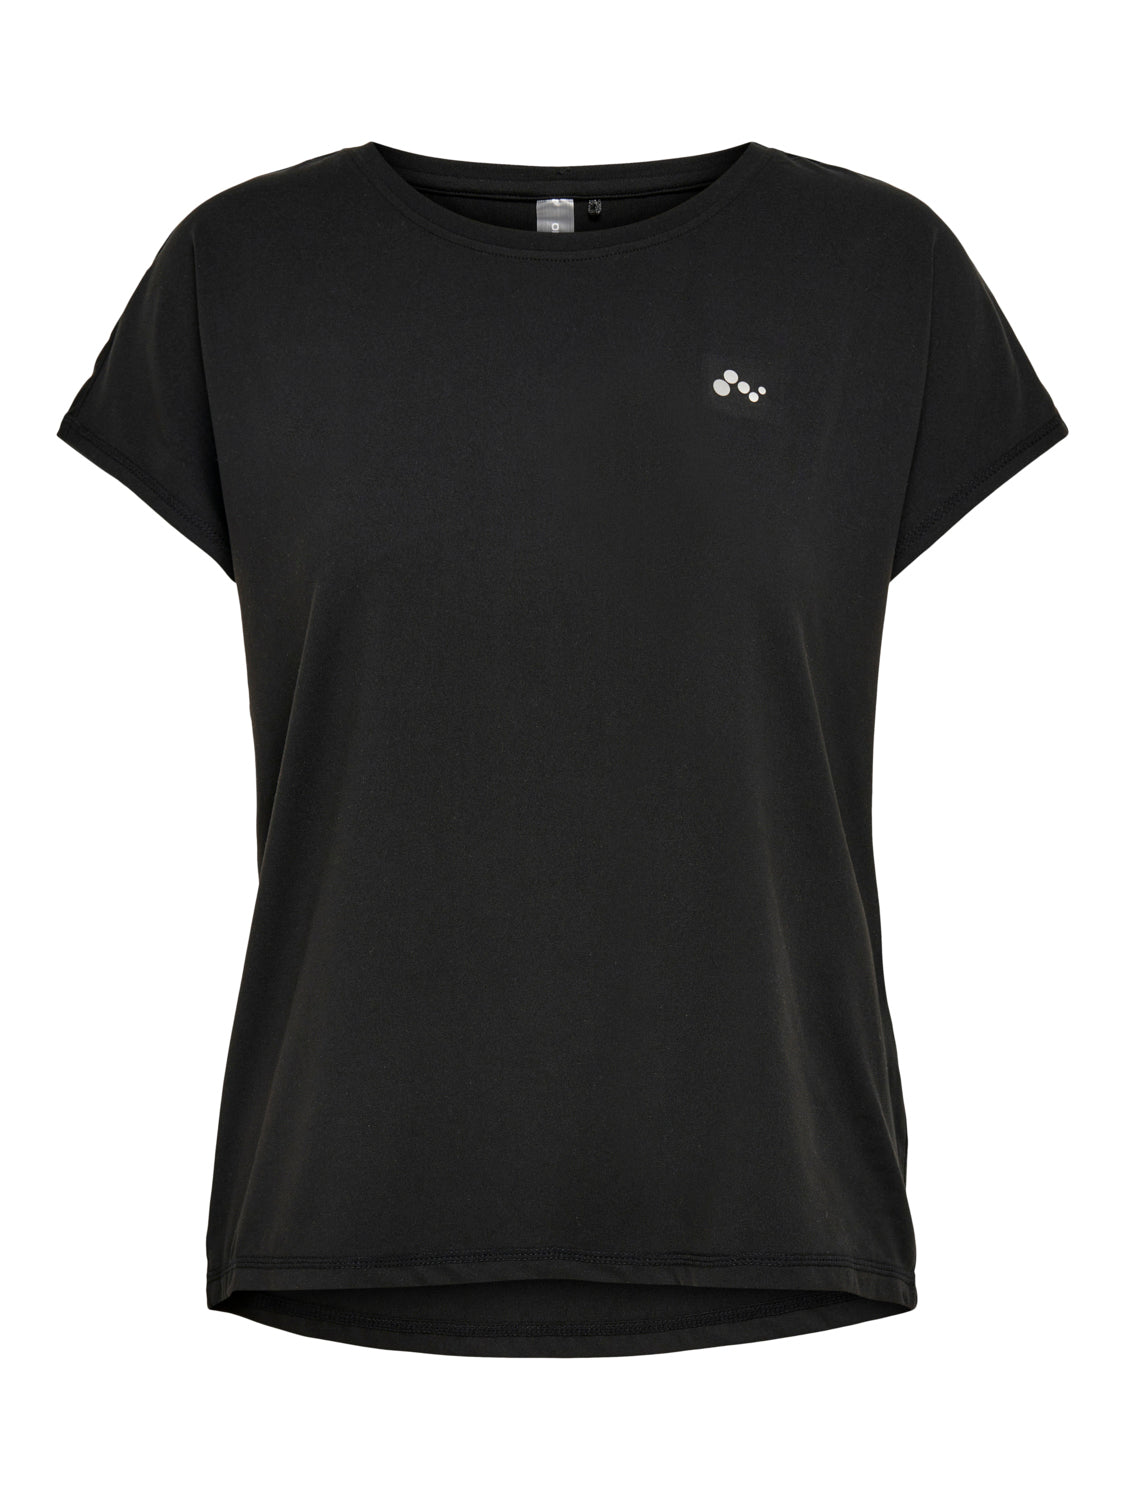 ONPAUBREE T-Shirt - Black